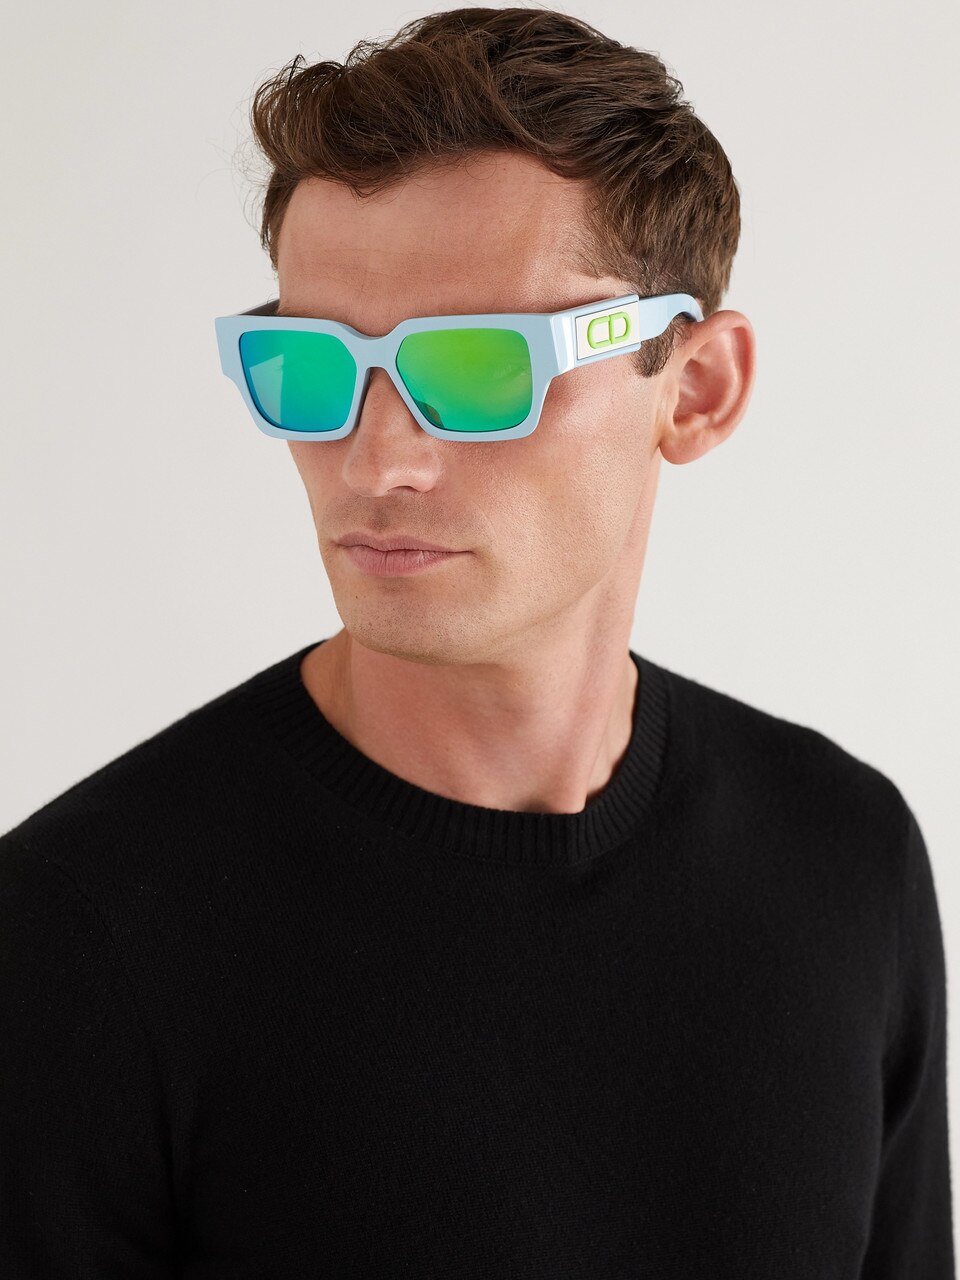 Dior Sunglasses  Eyewear photography Model sunglasses Dior sunglasses men